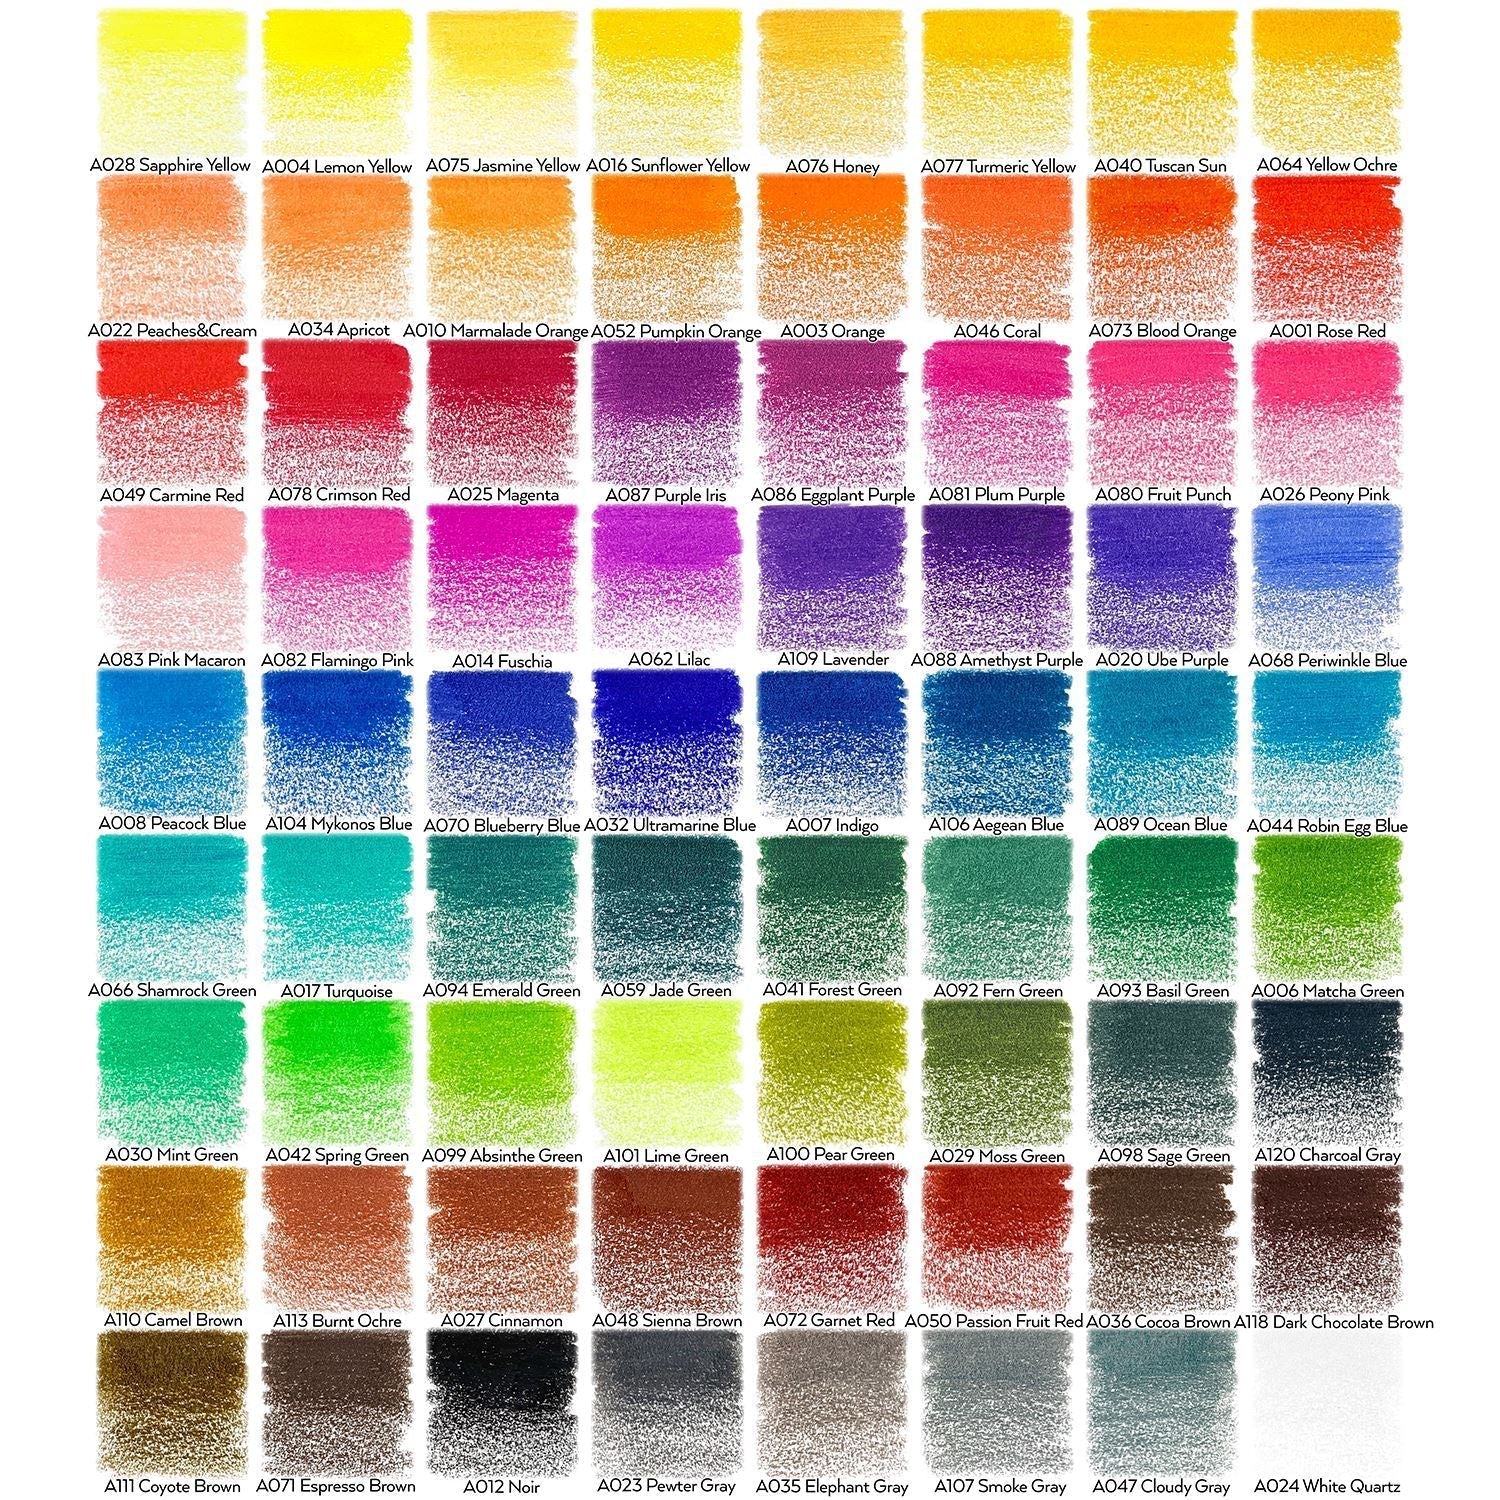 Set 72 Lápices Profesionales Colores Dibujo Arte Arteza Pro